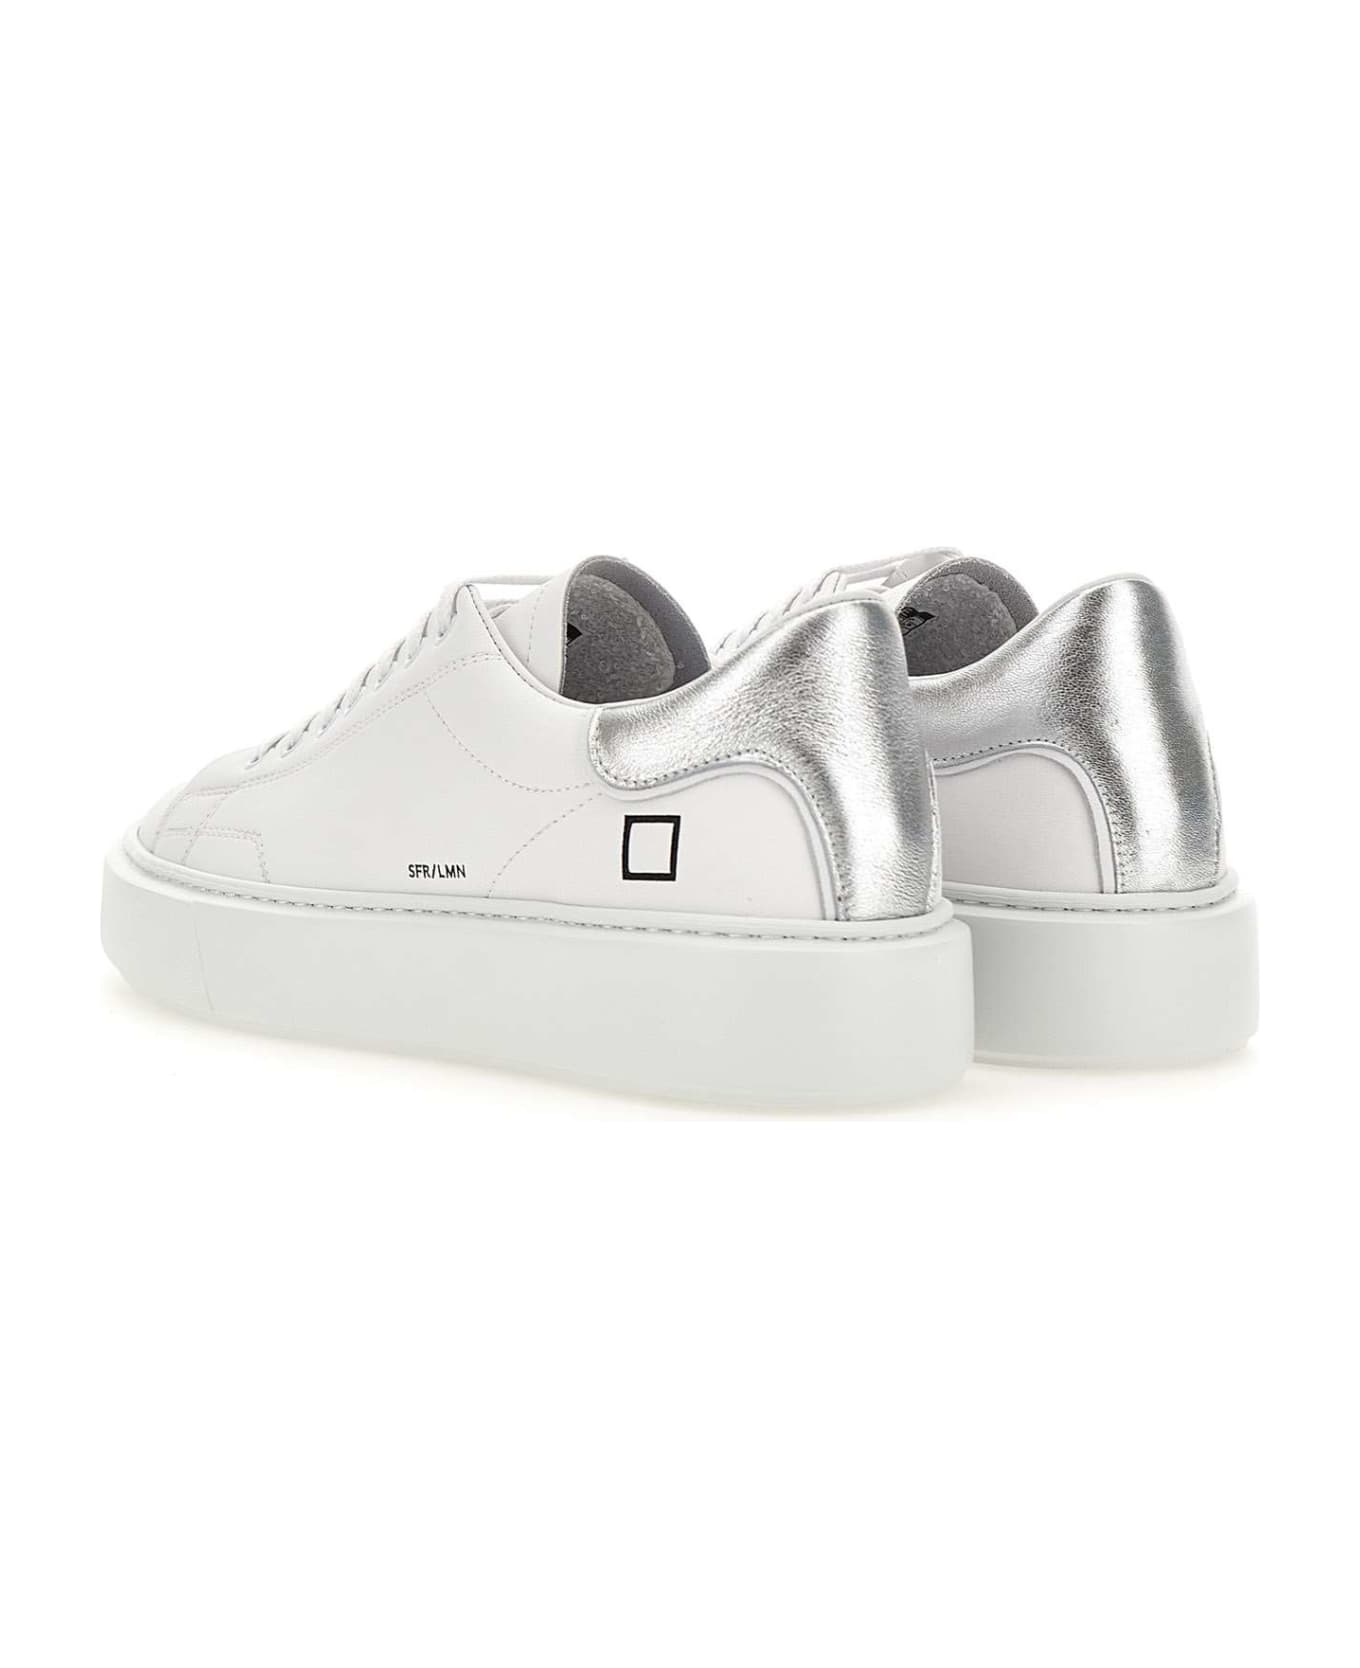 D.A.T.E. "sfera Laminated" Leather Sneakers - WHITE